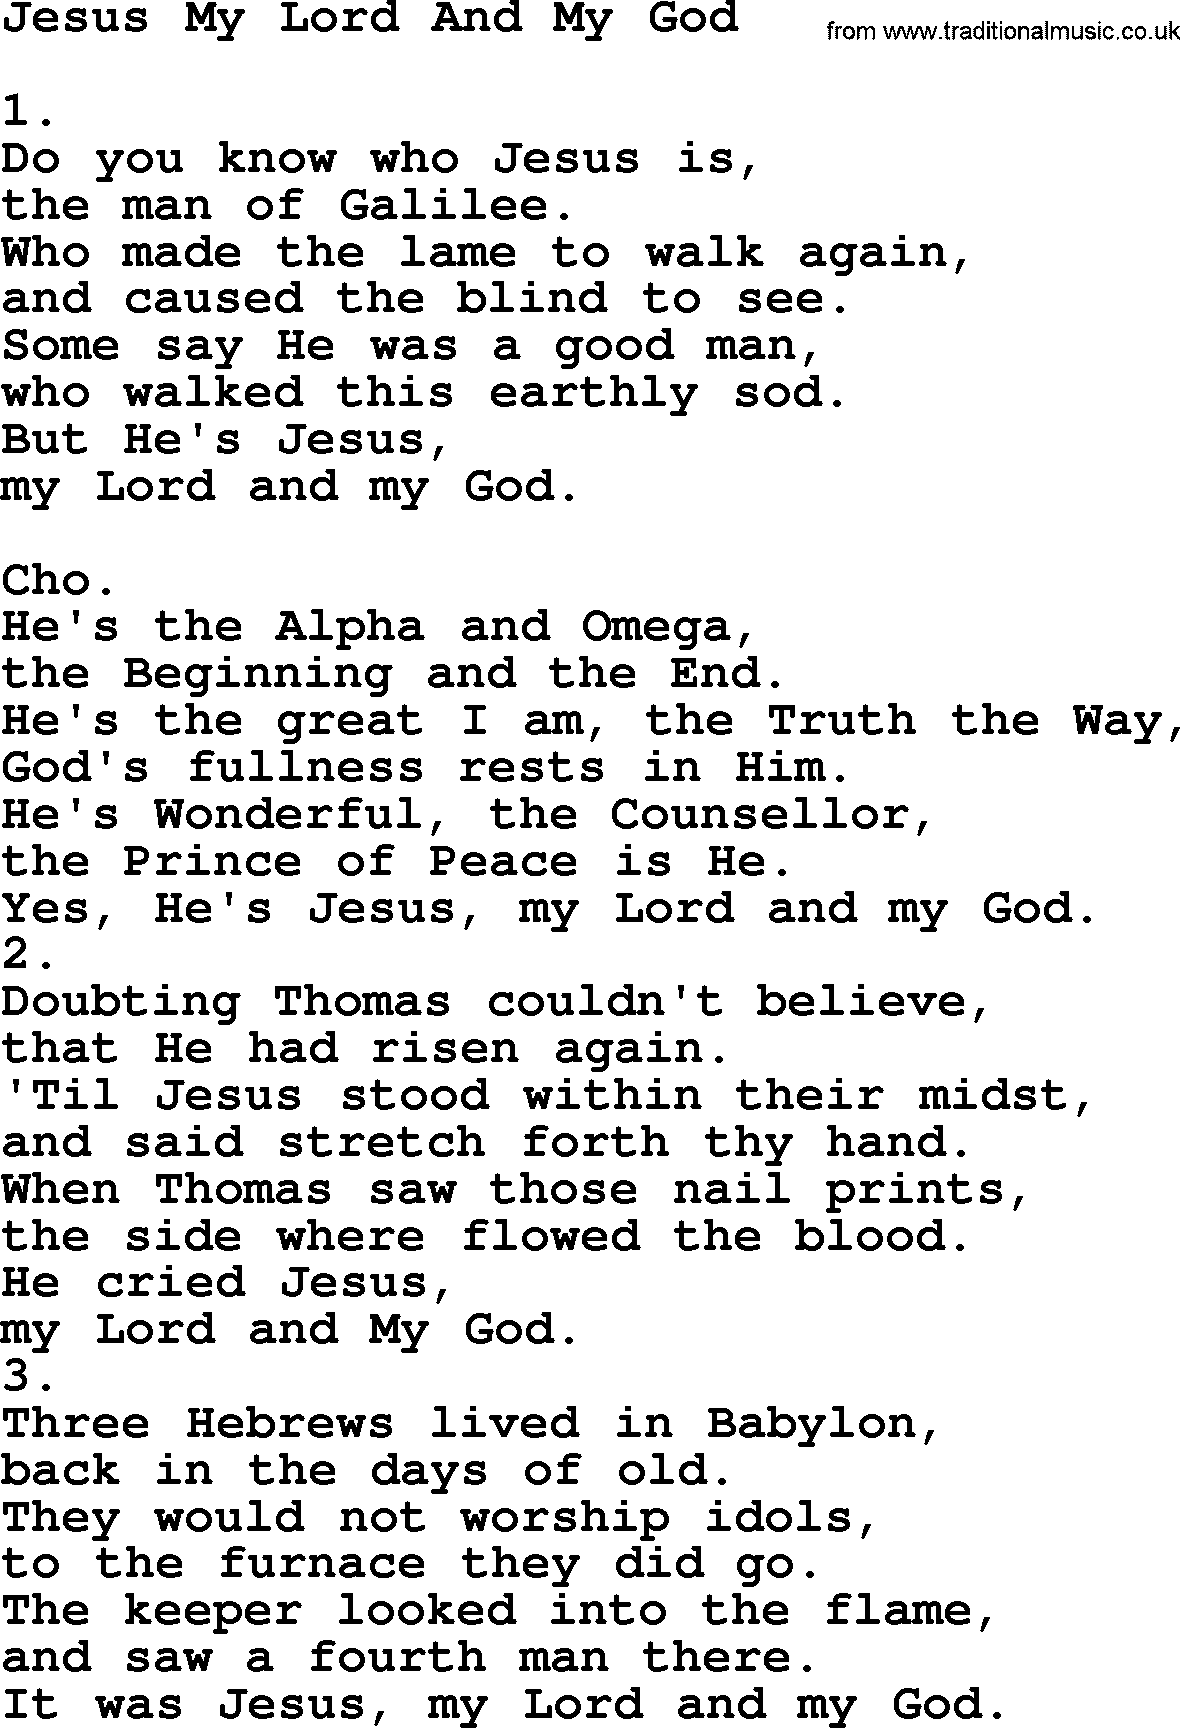 Apostolic & Pentecostal Hymns and Songs, Hymn: Jesus My Lord And My God lyrics and PDF